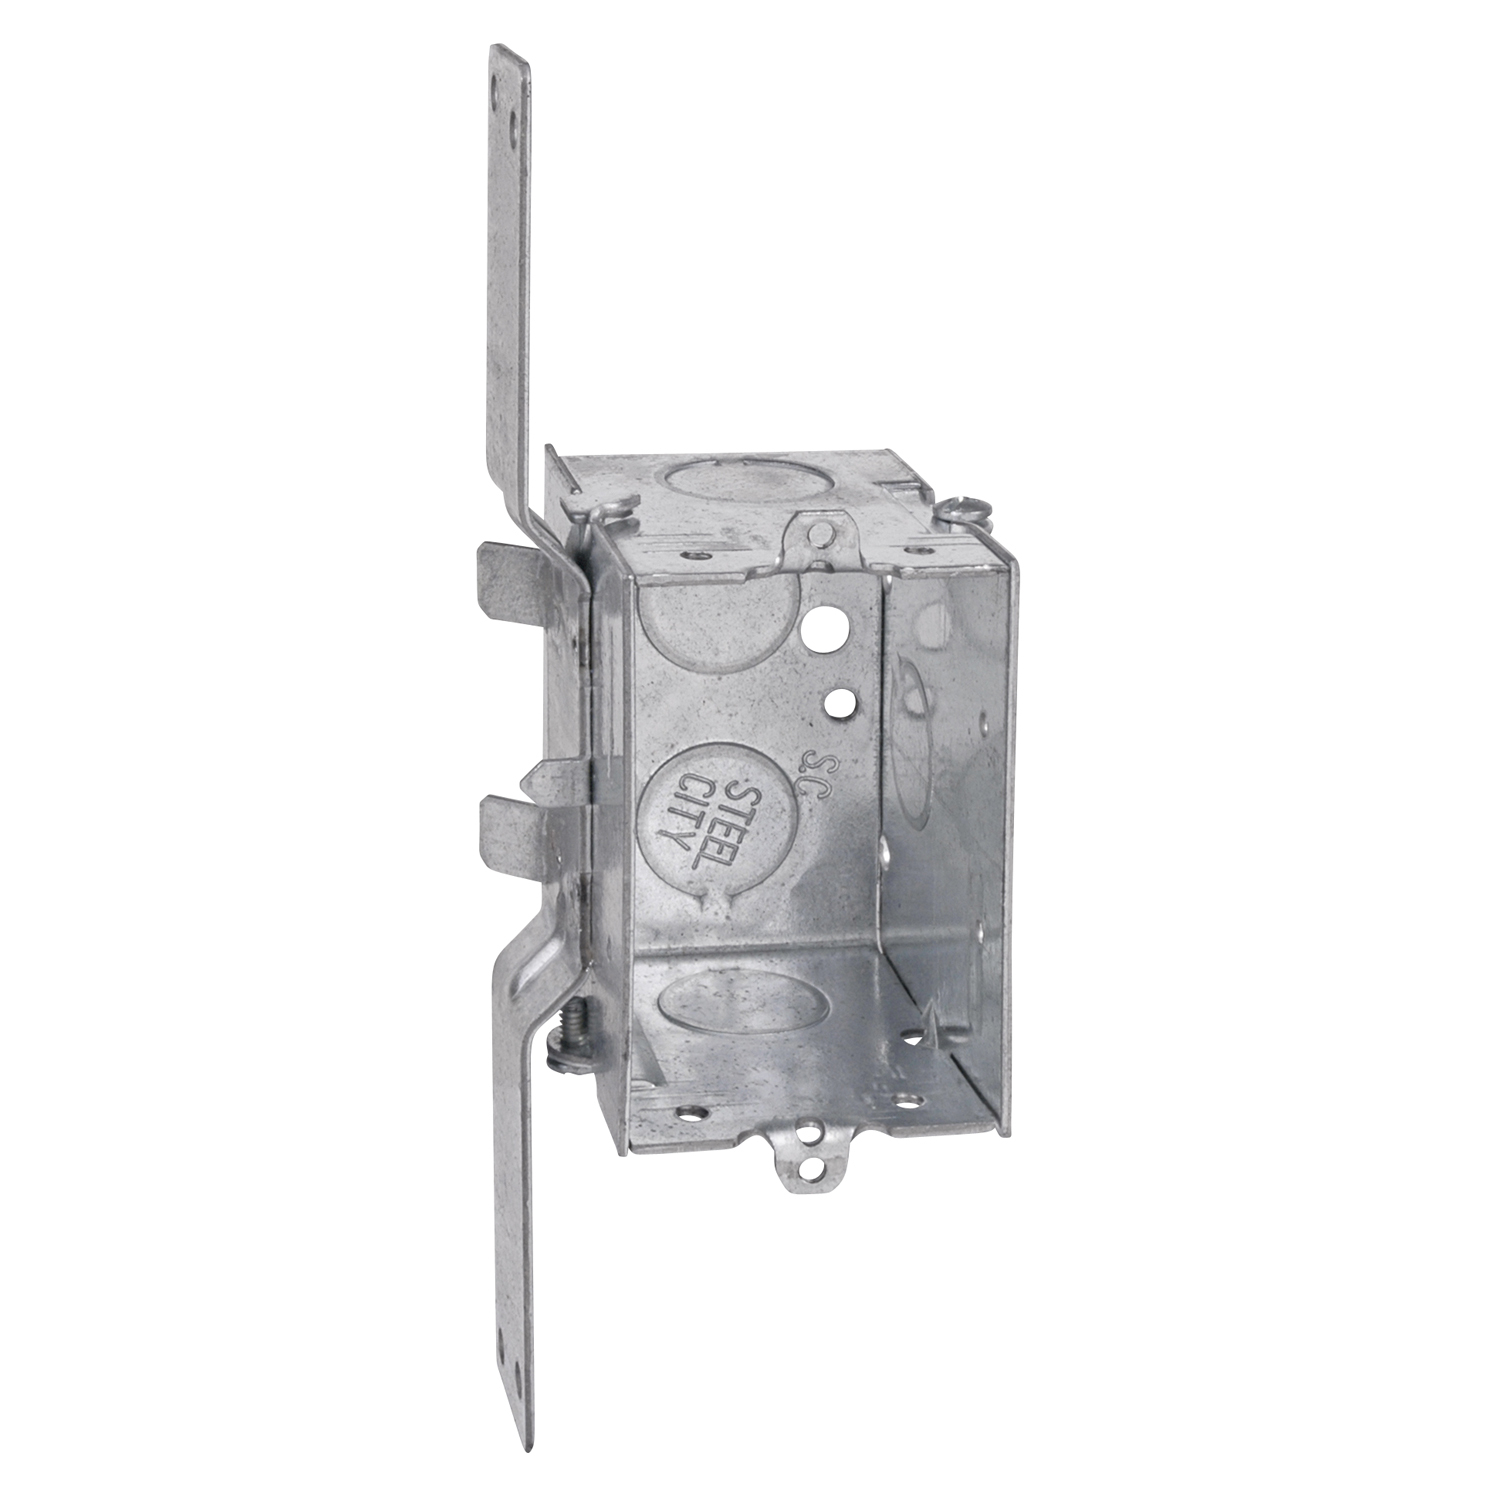 CDV-25 Metallic Switch Box Steel City;ABB - Installation Products